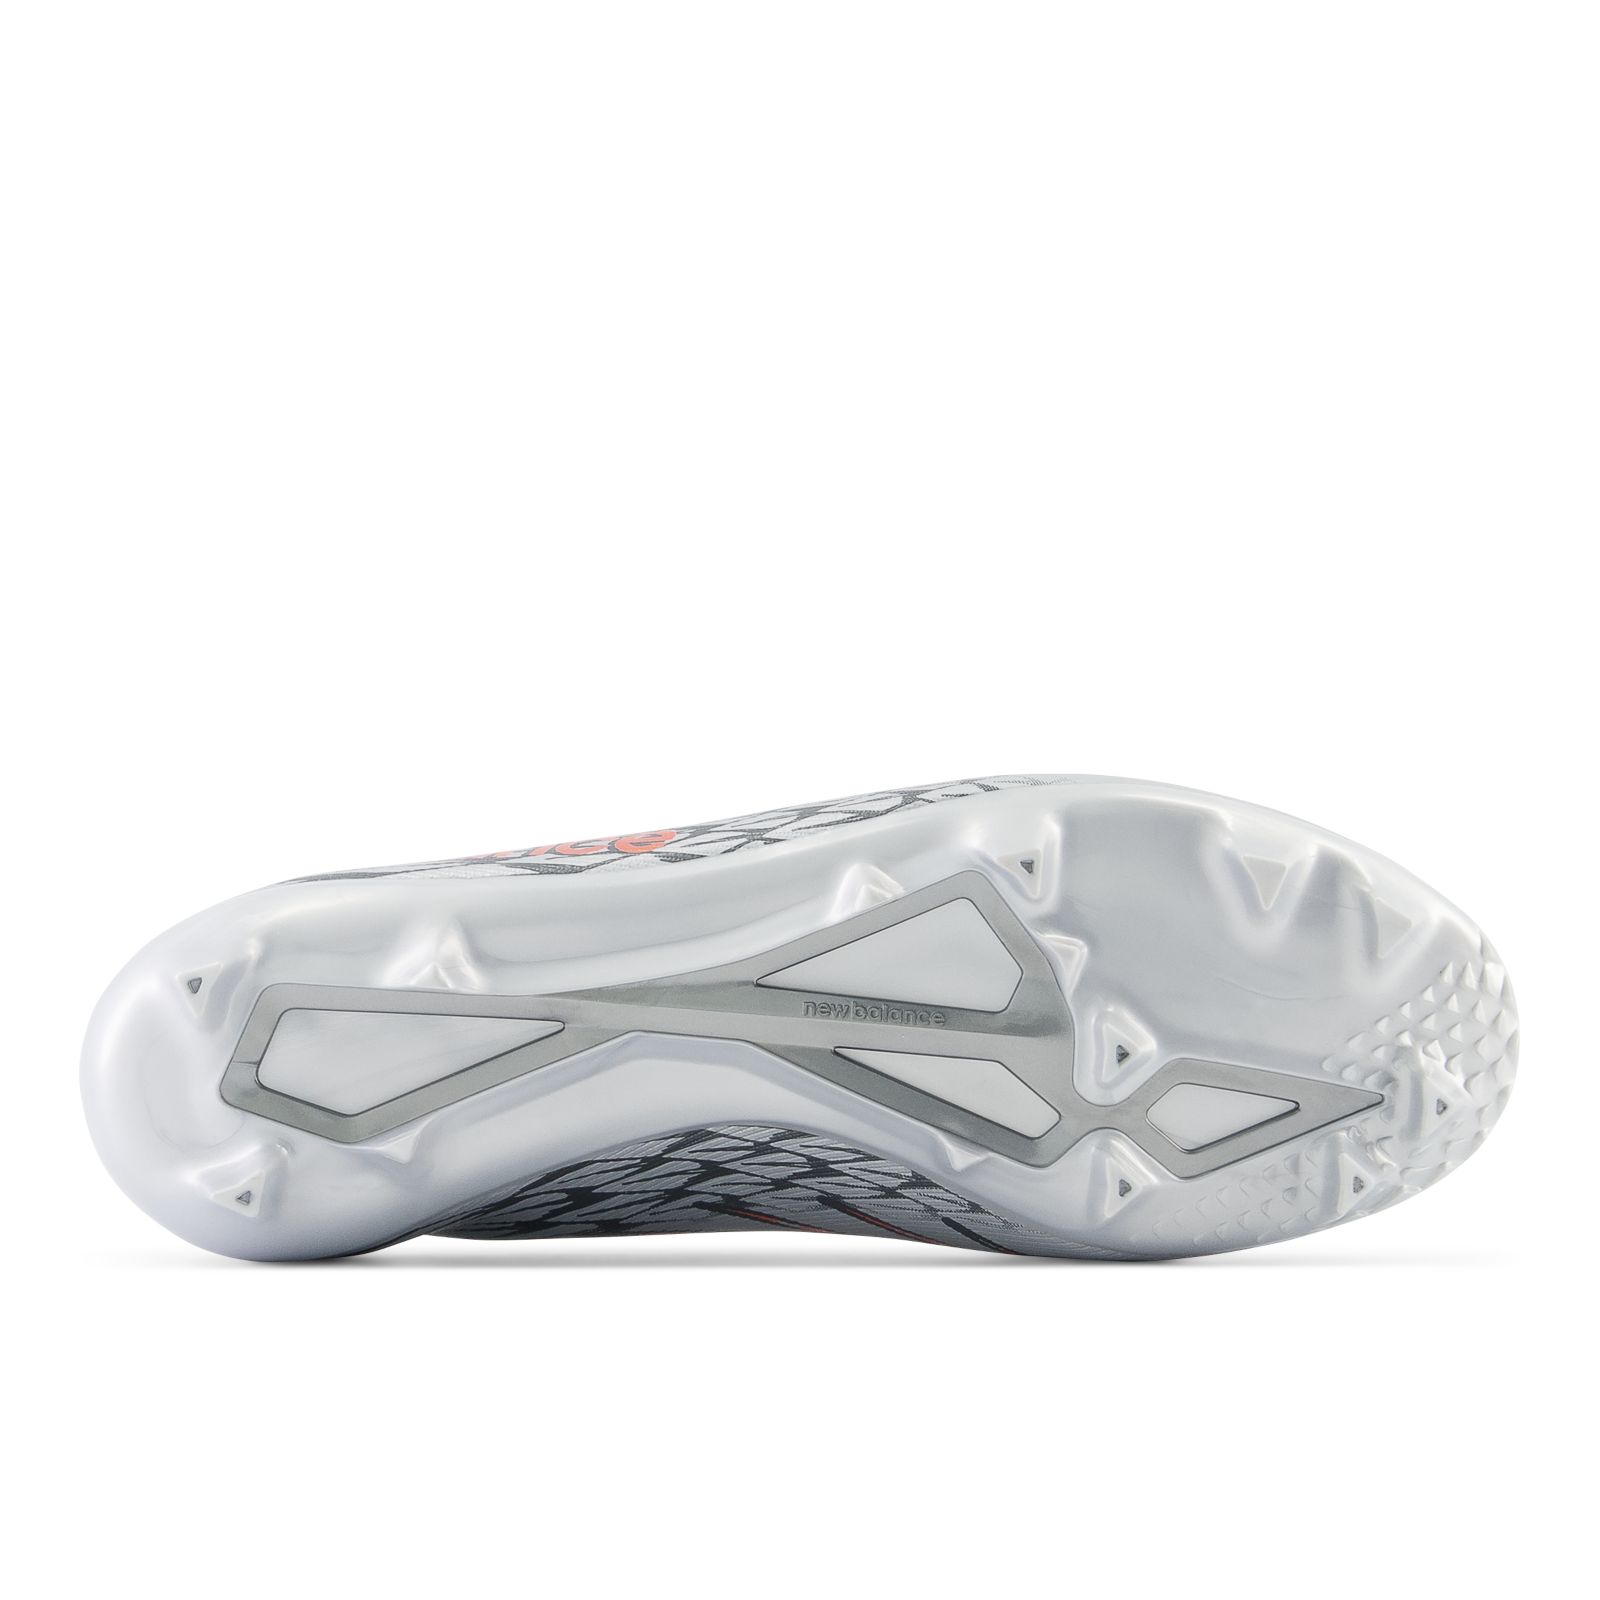 New Balance - M Furon Pro FG v7 Orbit - Chaussures à crampons